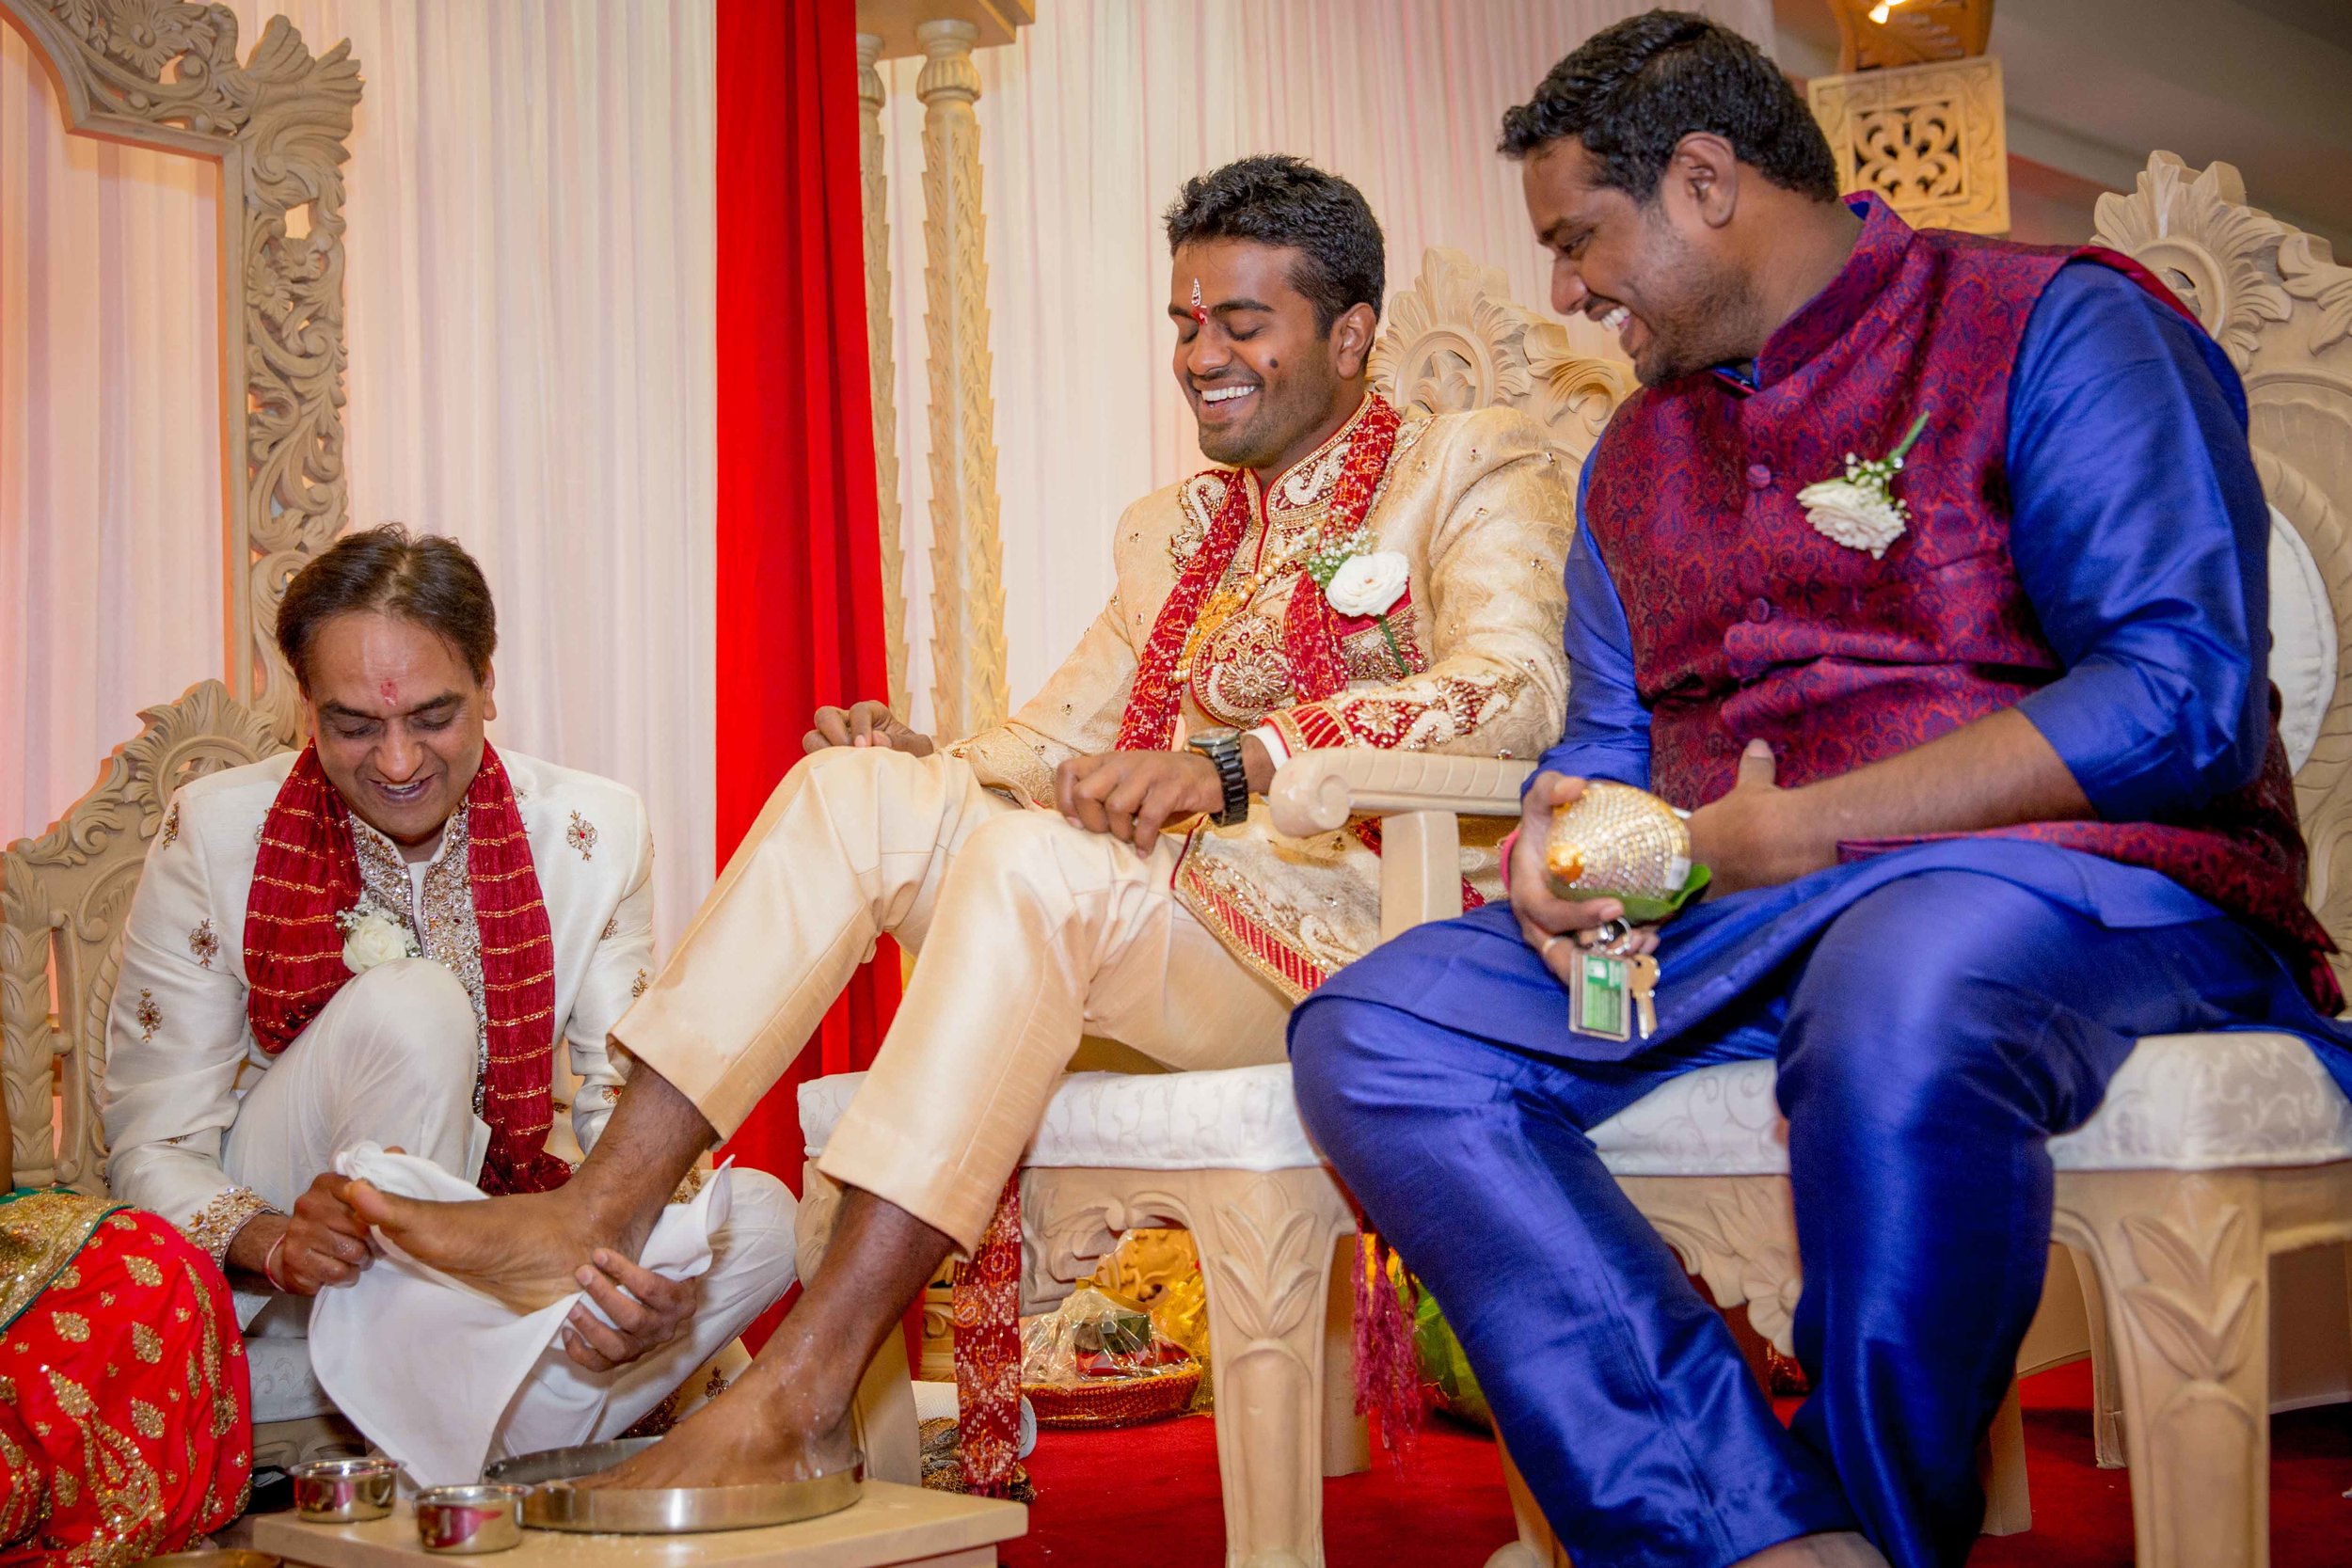 premier-banquetting-london-Hindu-asian-wedding-photographer-natalia-smith-photography-13.jpg